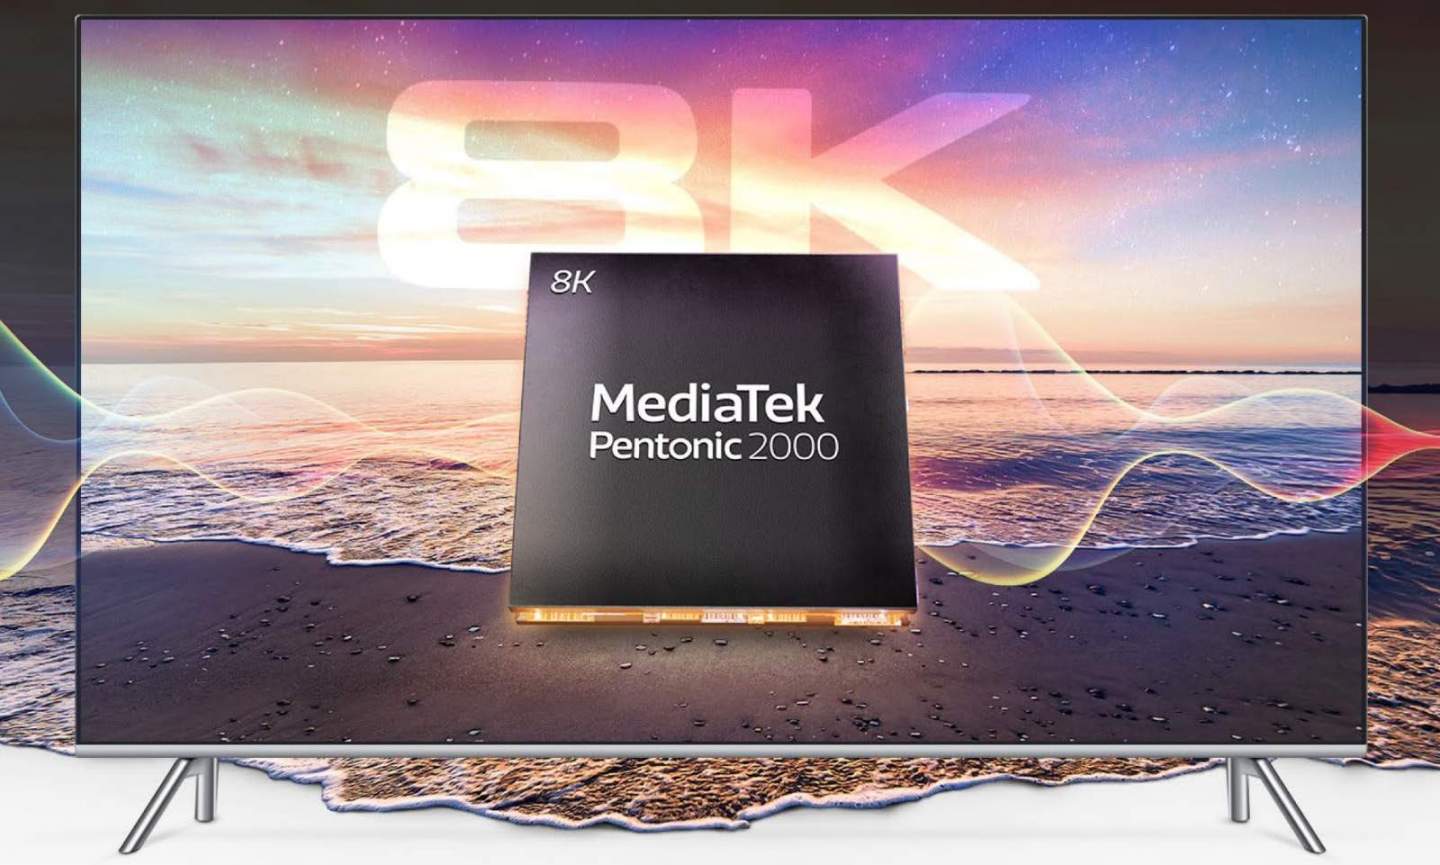 mediatek insert - تراشه های جدید Pentonic 2000 مدیاتک مسیر را برای نسل جدیدی از تلویزیون های 8K هموار میکند